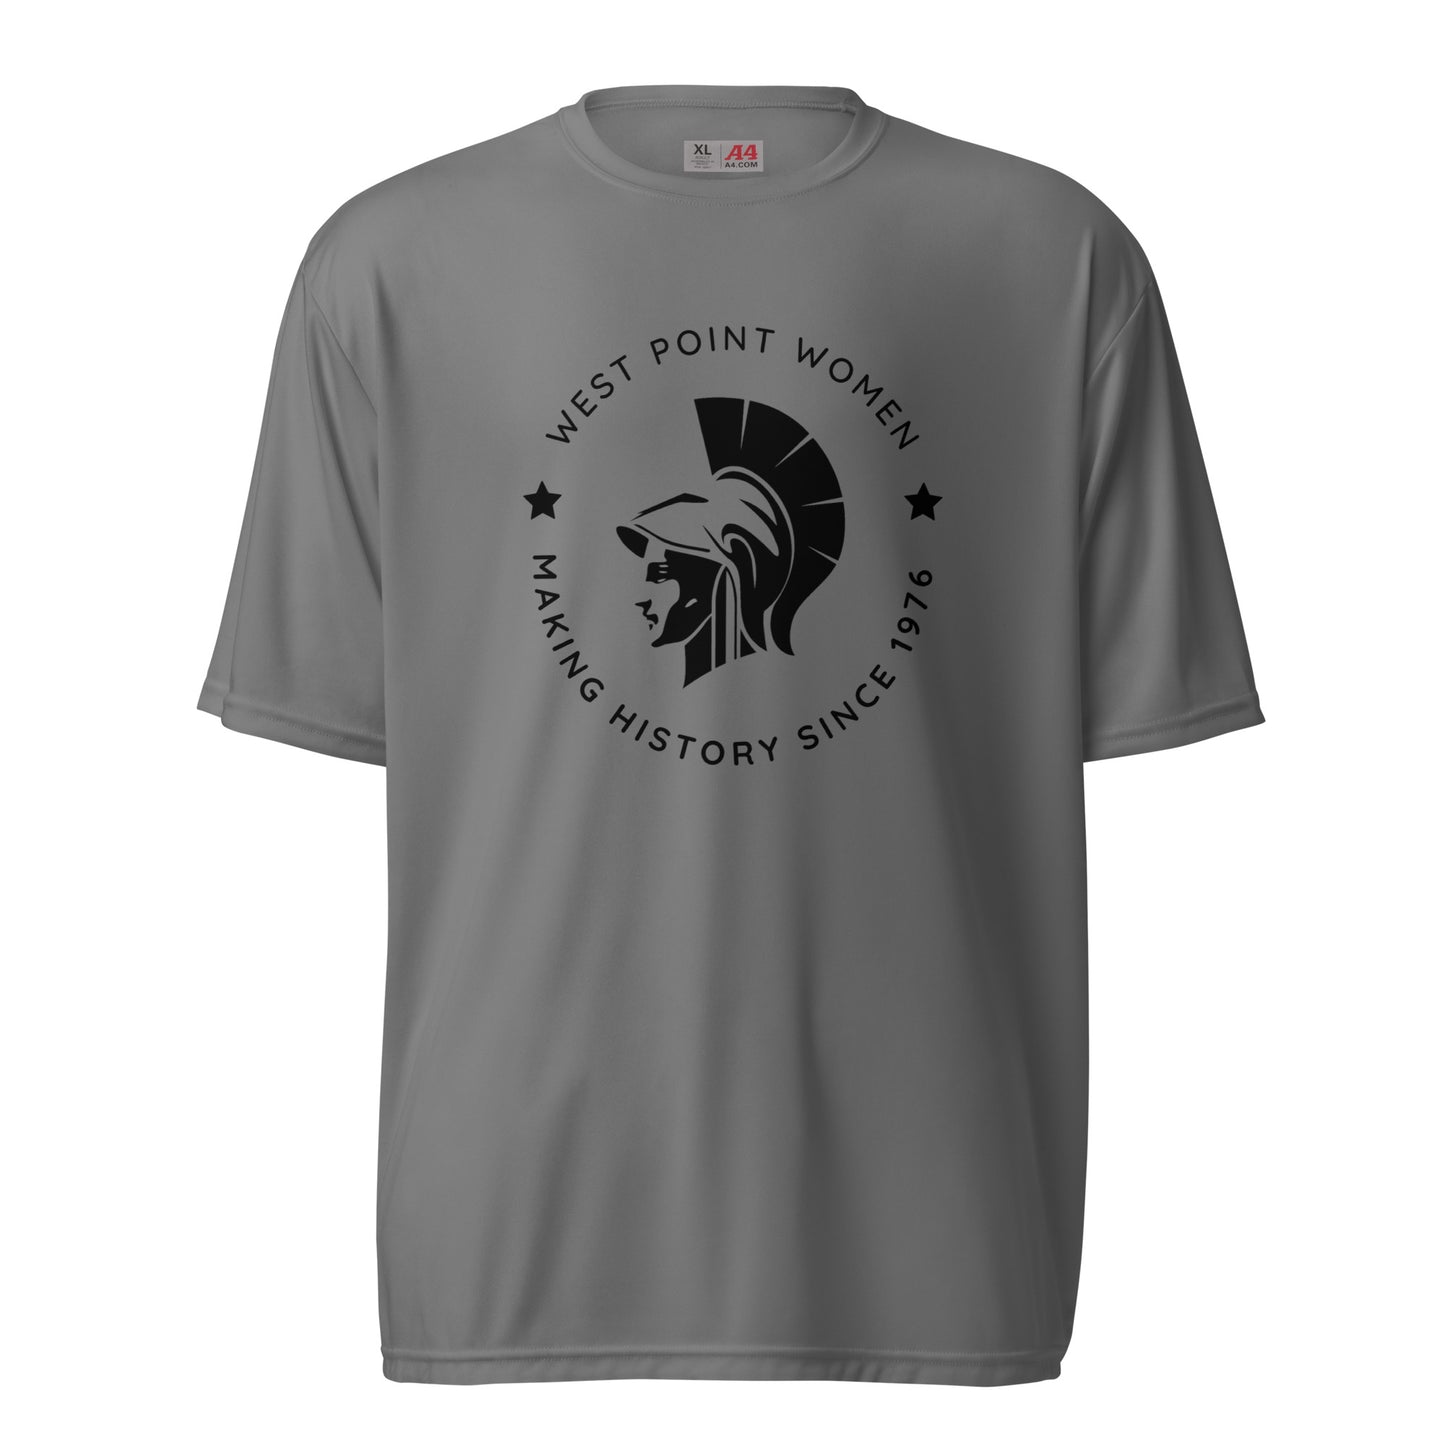 "West Point Women Making History Since 1976" Unisex performance crew neck t-shirt